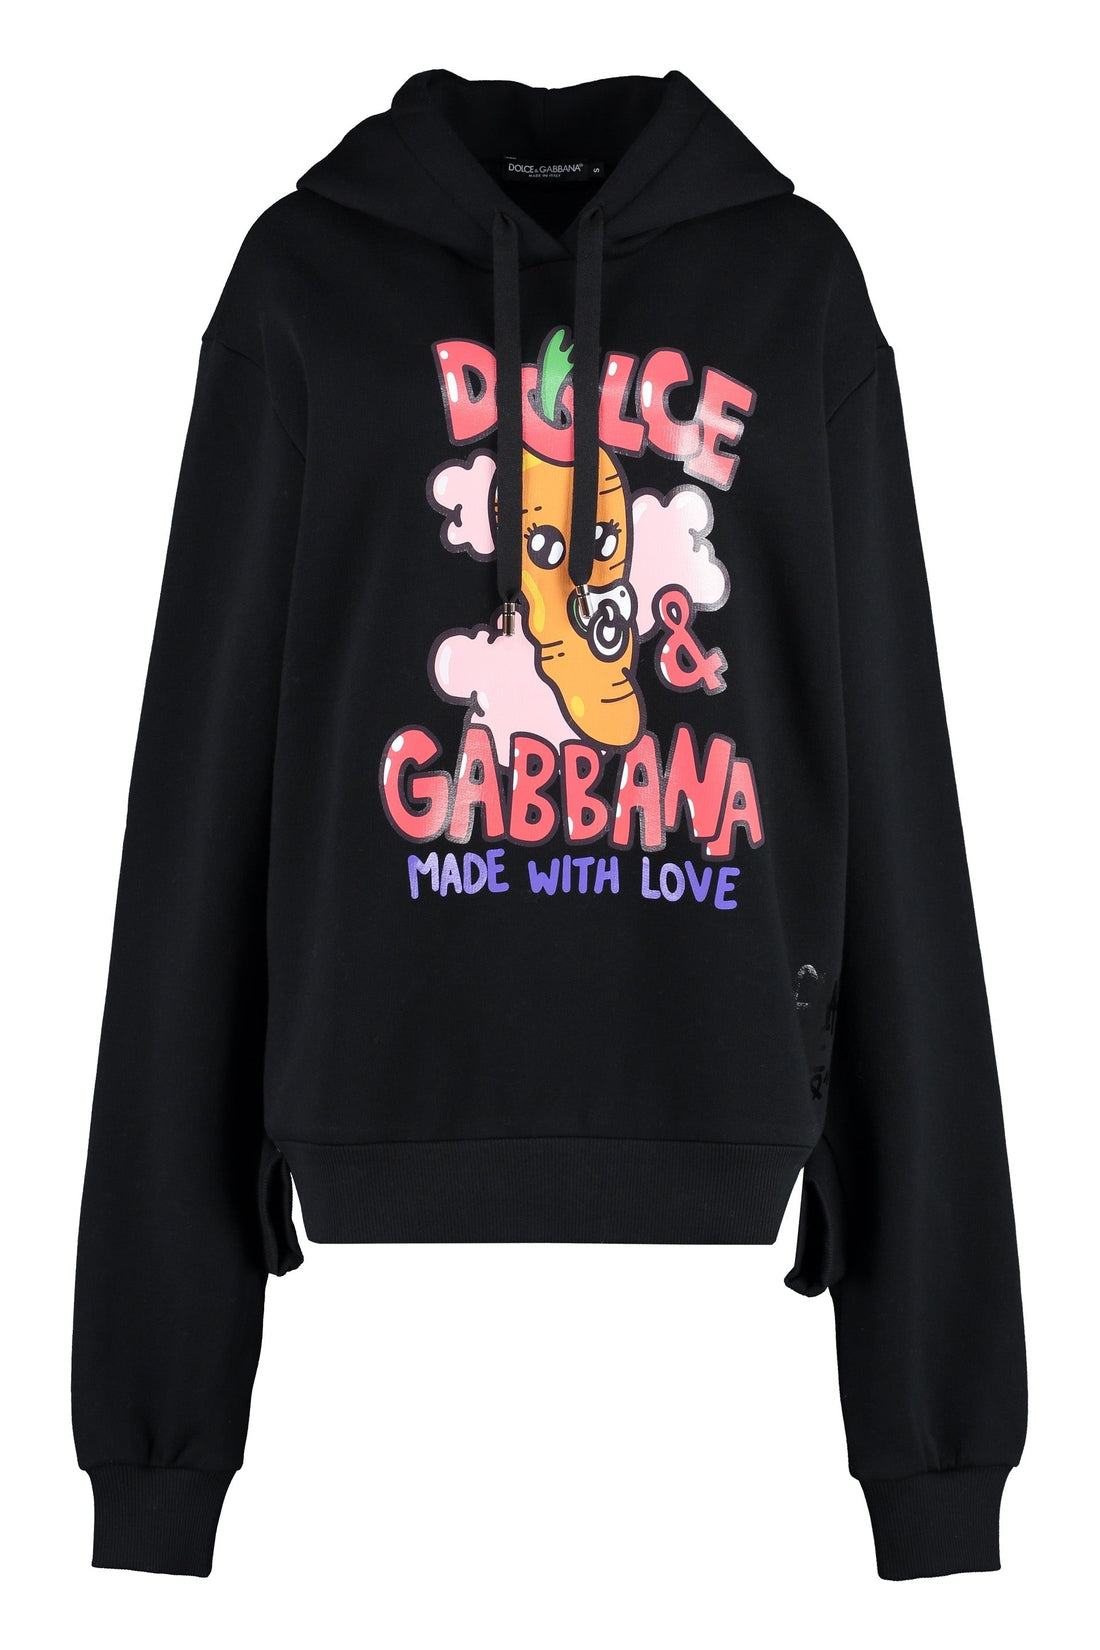 Dolce & Gabbana-OUTLET-SALE-Sweatshirt with Gianpiero D’Alessandro print-ARCHIVIST